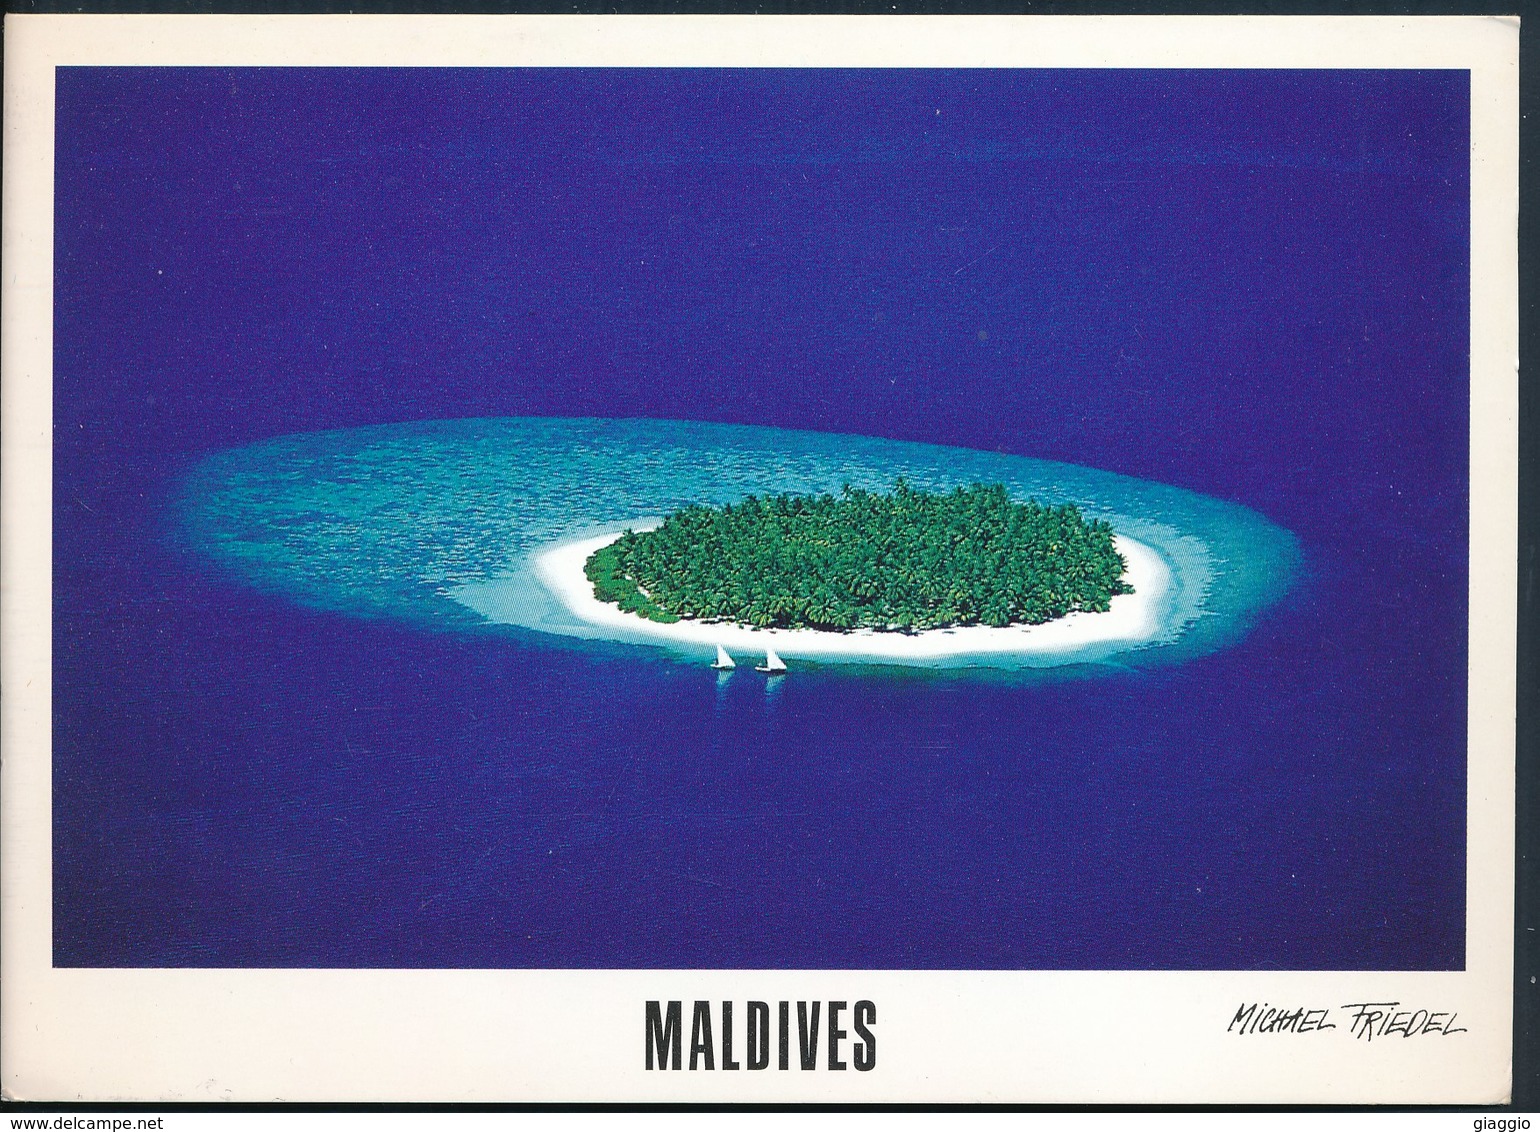 °°° 19469 - MALDIVES - ATOLL - 2002 With Stamps °°° - Maldive